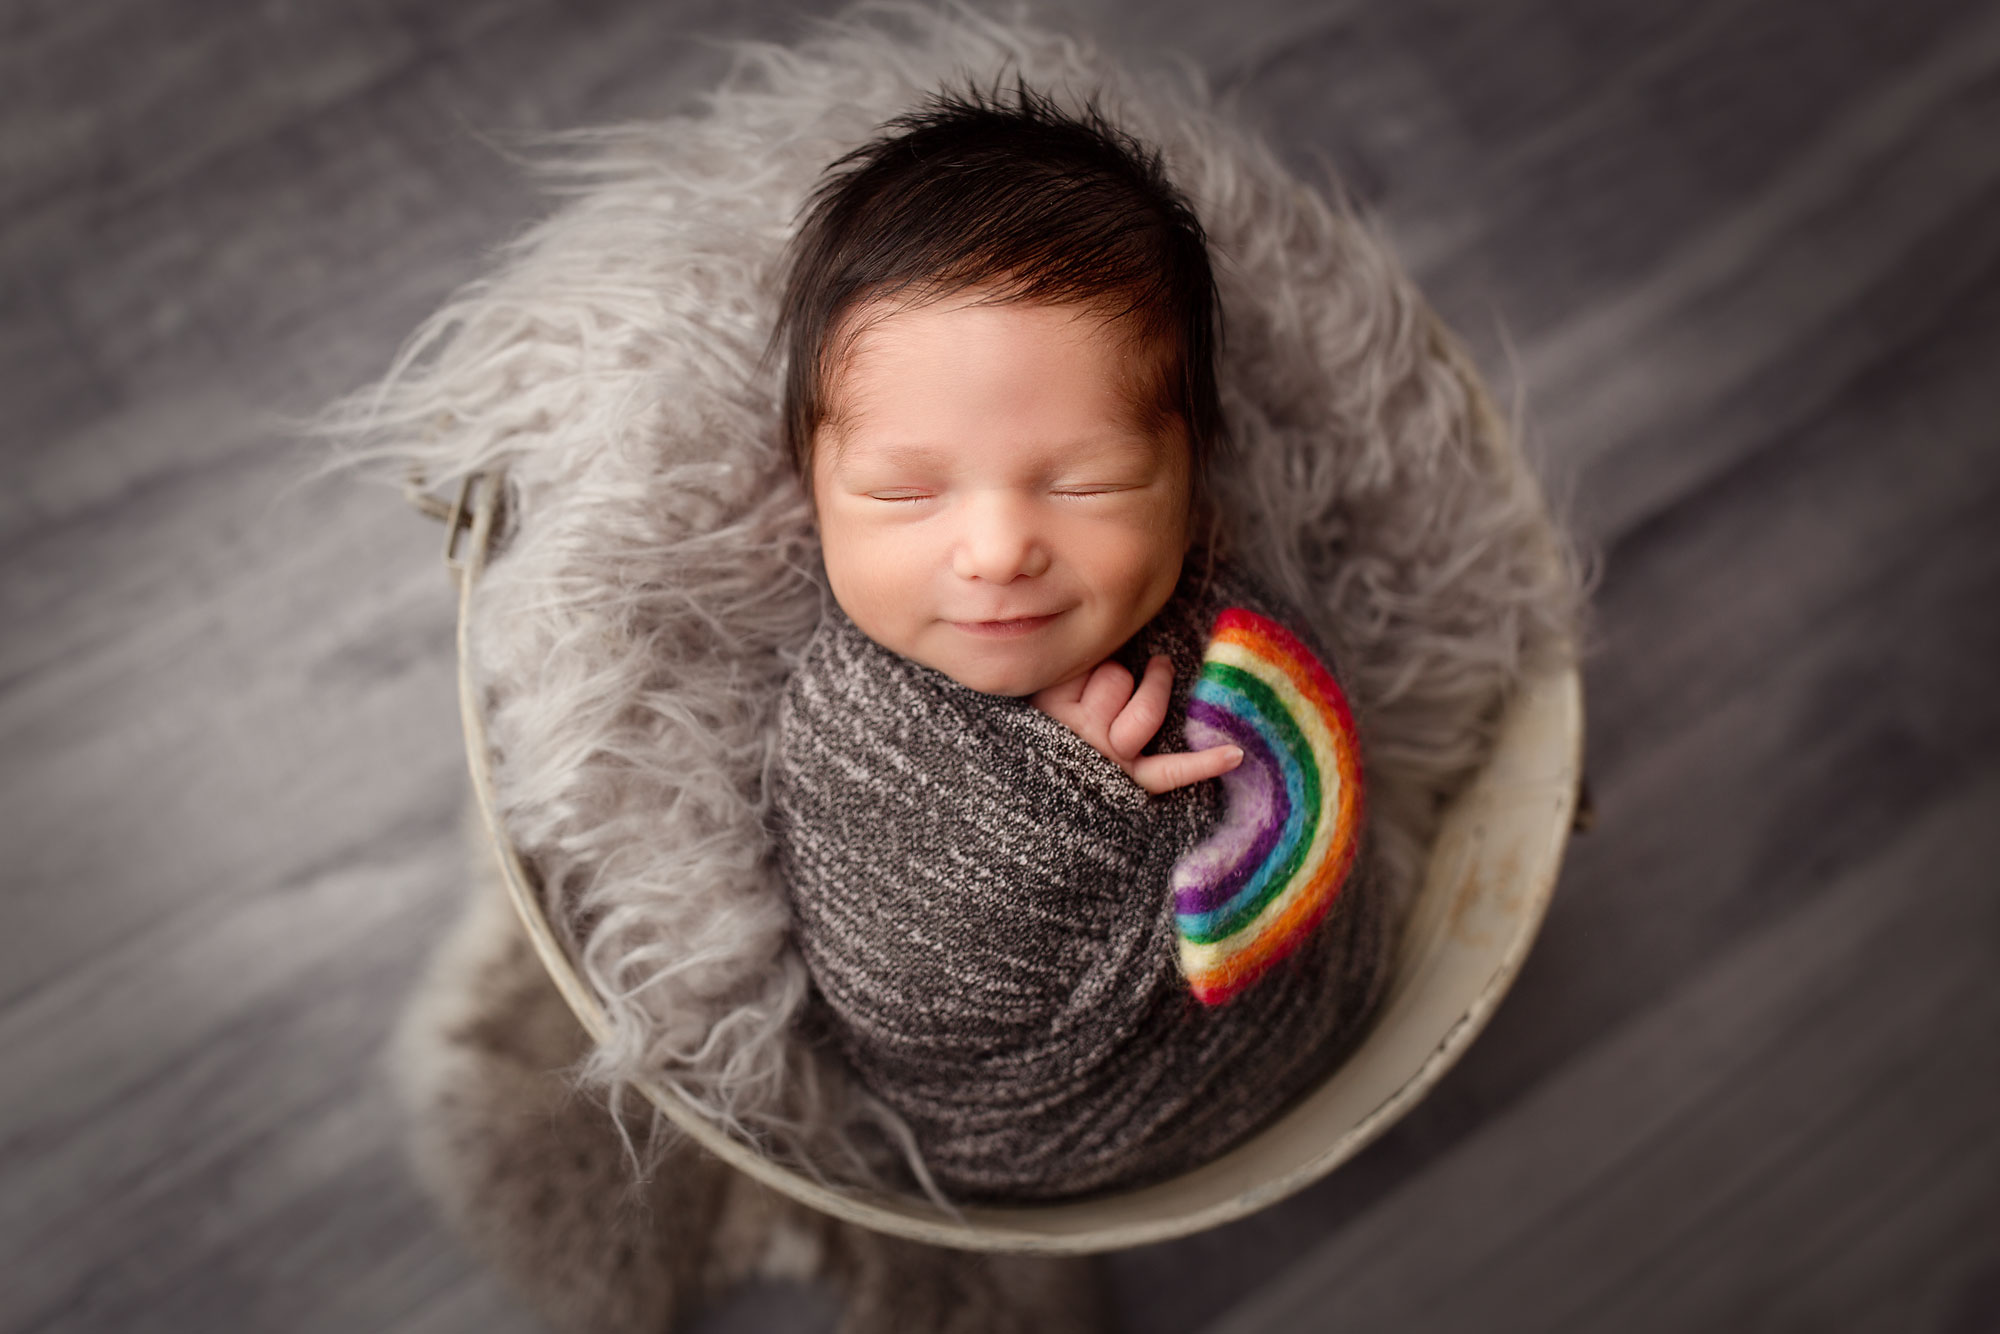  union county nj Rainbow baby photo session 